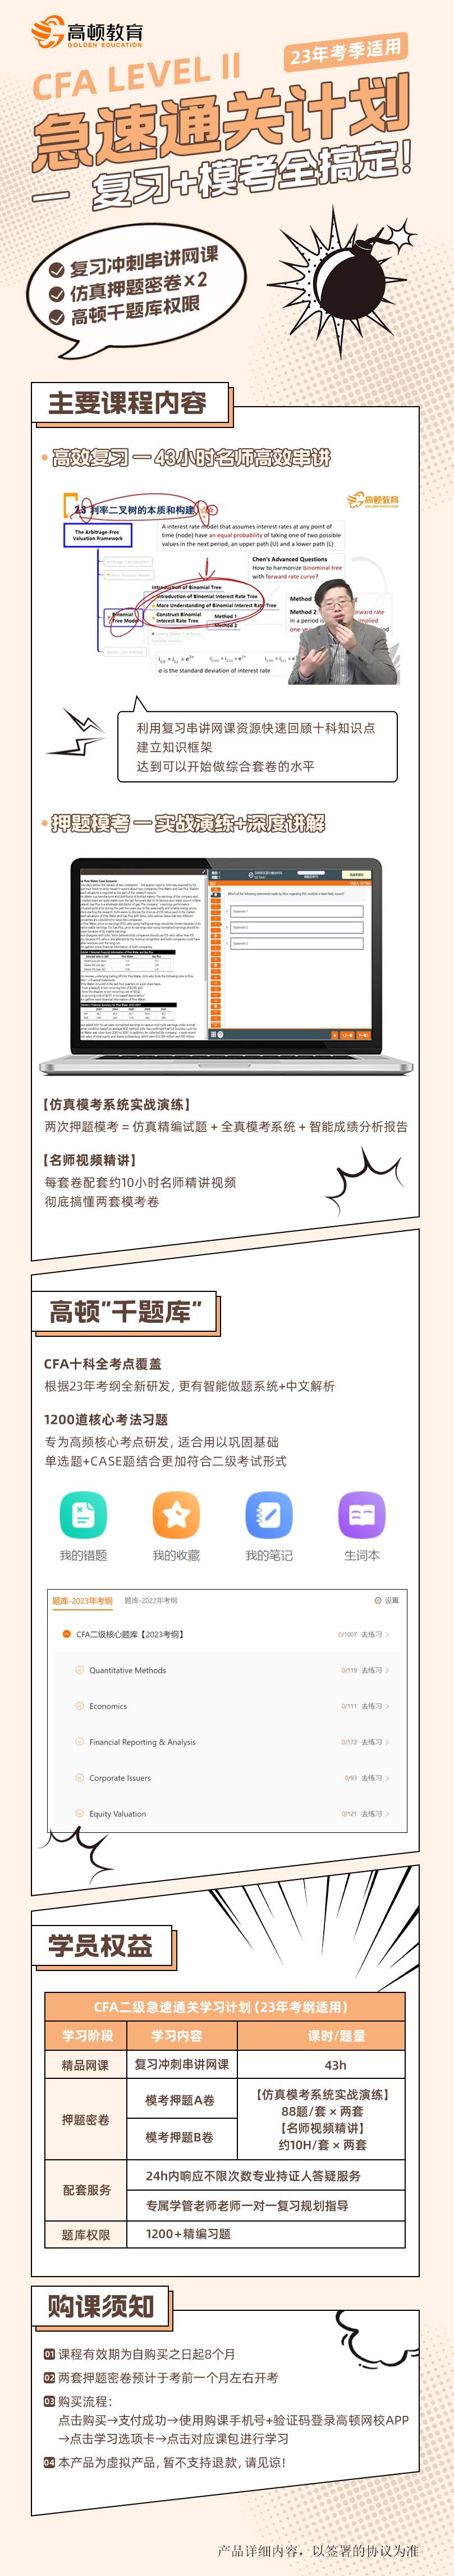 https://simg01.gaodunwangxiao.com/uploadfiles/product-center/202306/01/4687b_20230601133532.jpg